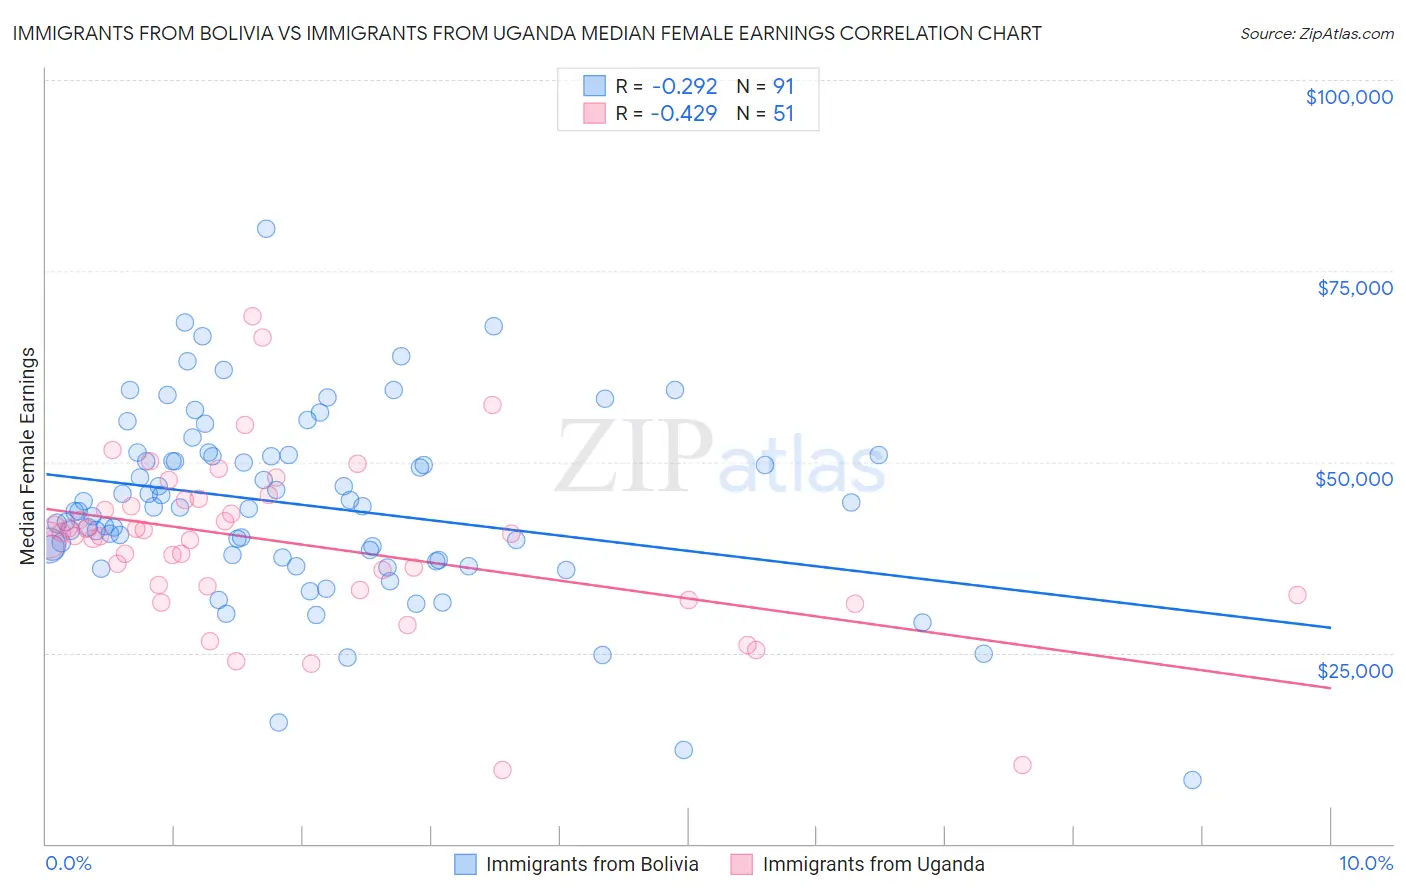 Immigrants from Bolivia vs Immigrants from Uganda Median Female Earnings